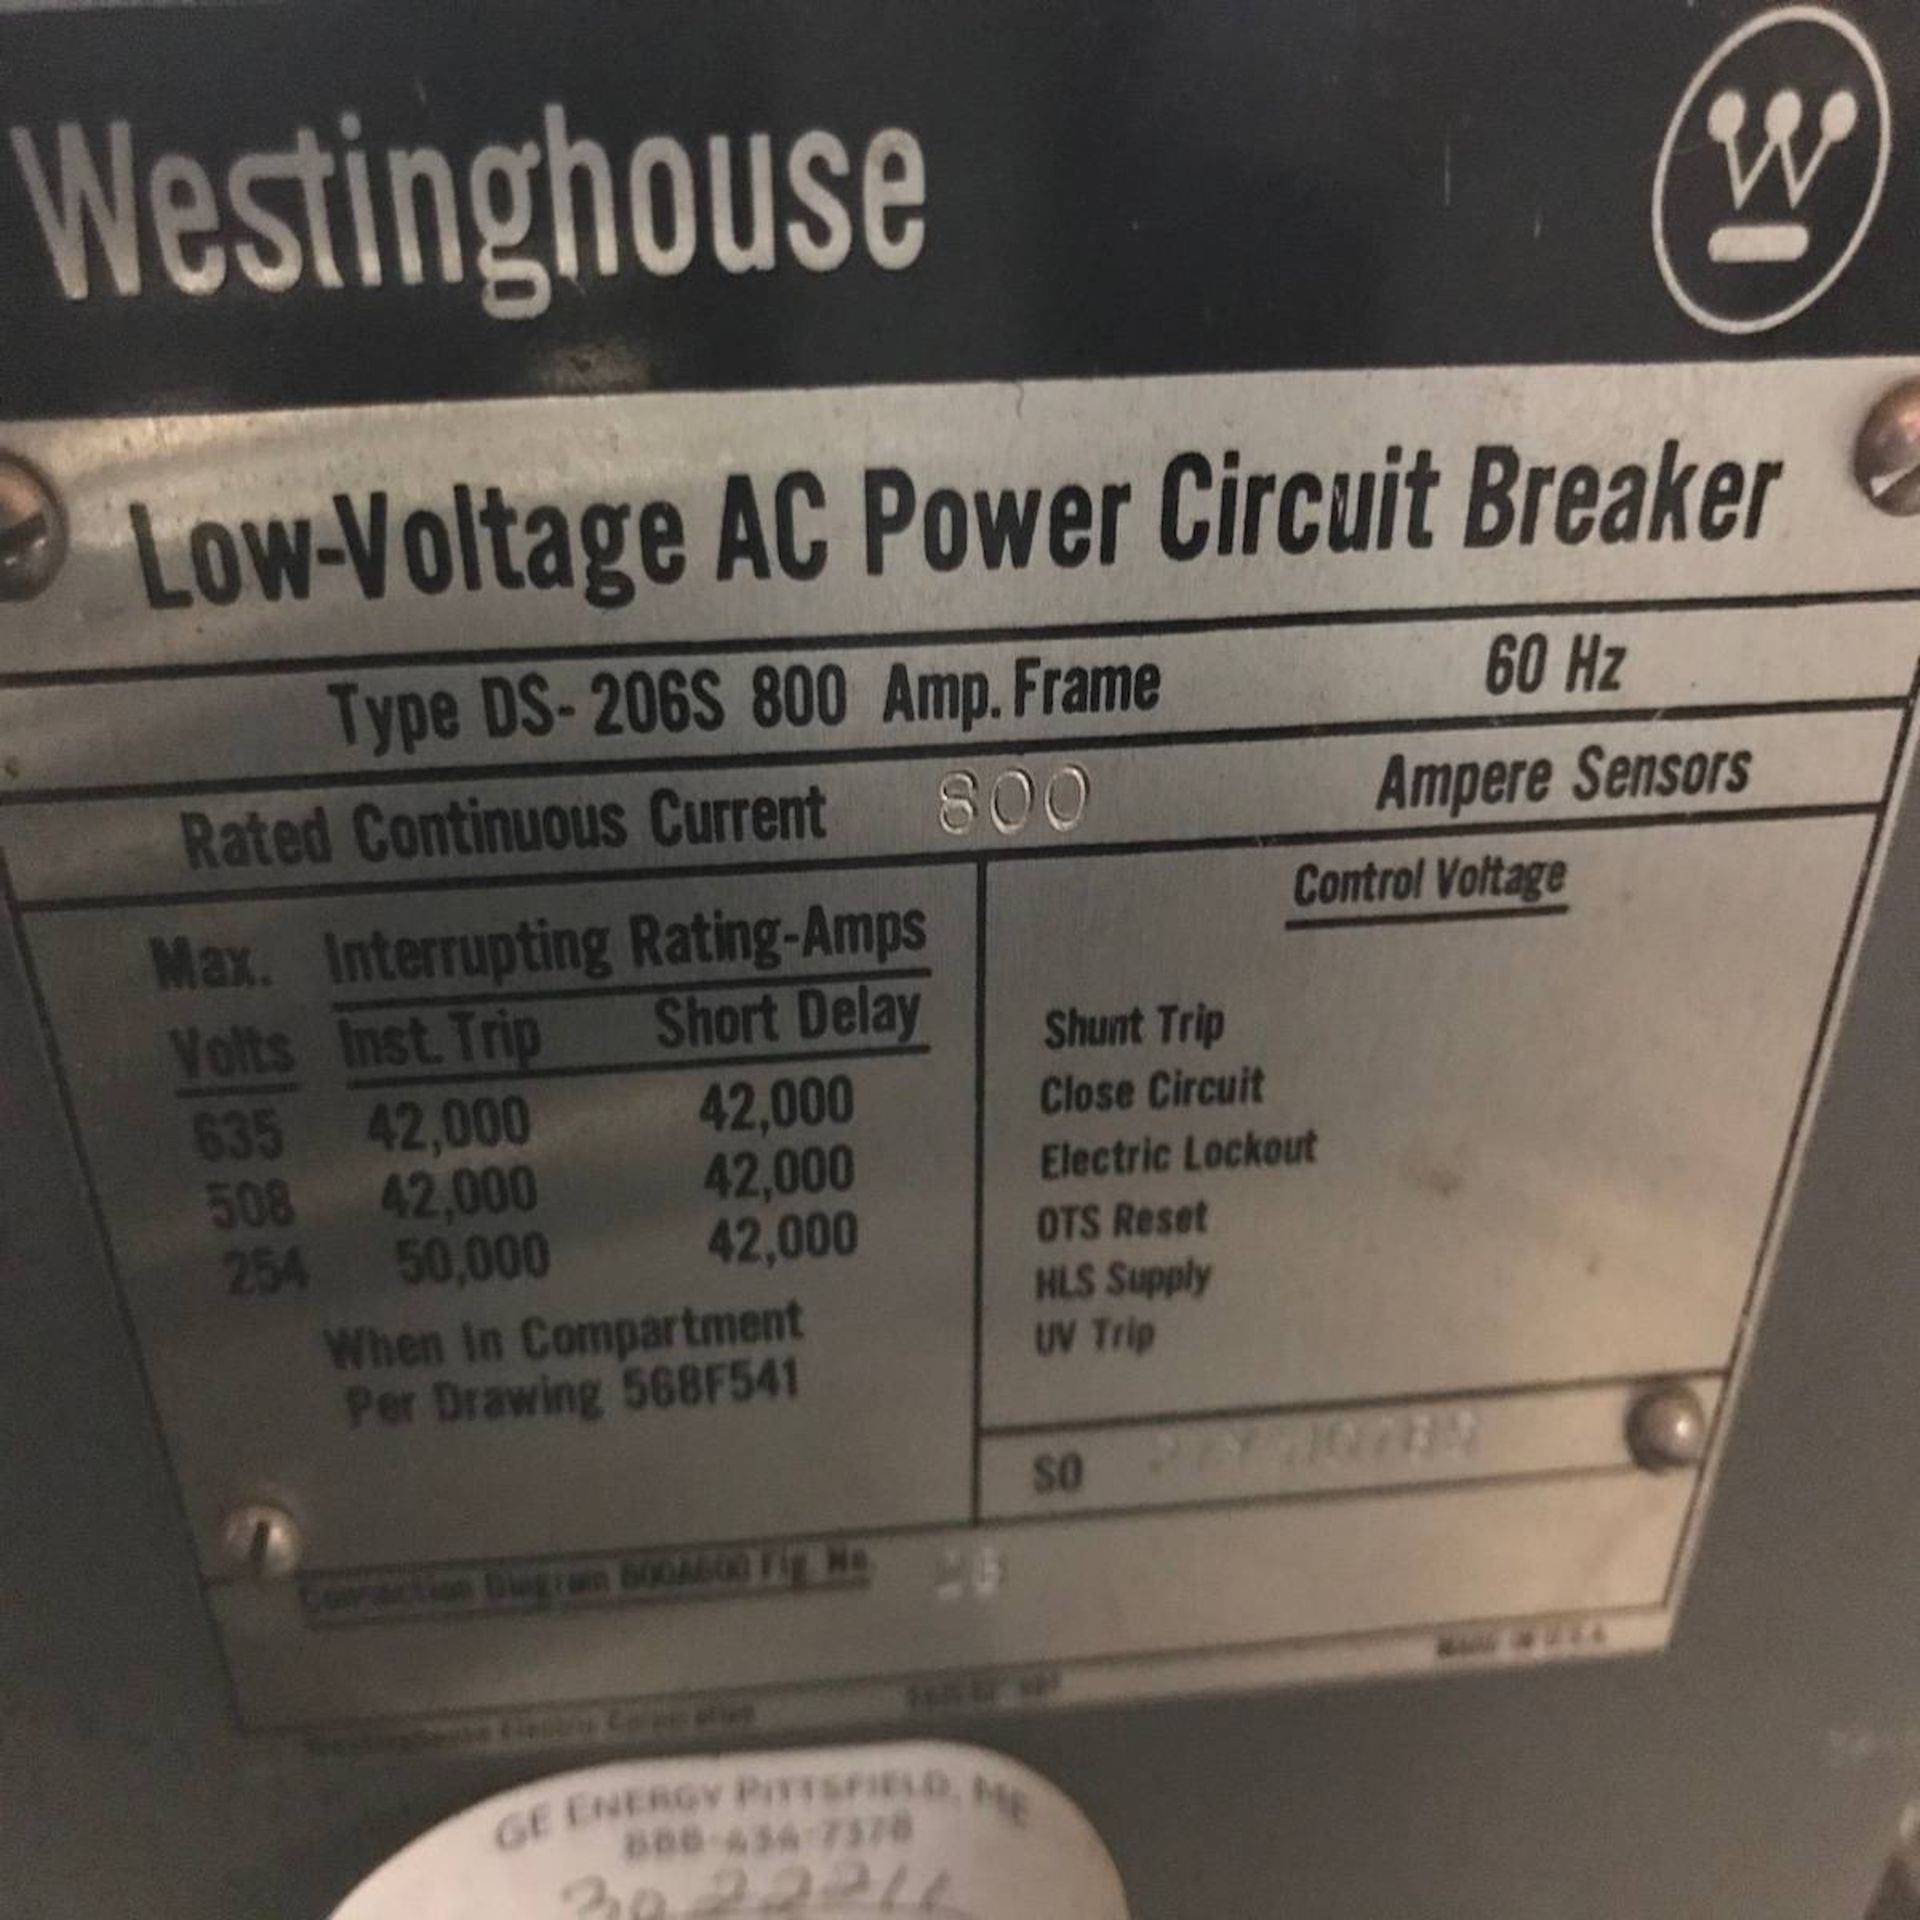 Westinghouse DSL-206 Low Voltage AC Power Circuit Breaker - Image 4 of 5